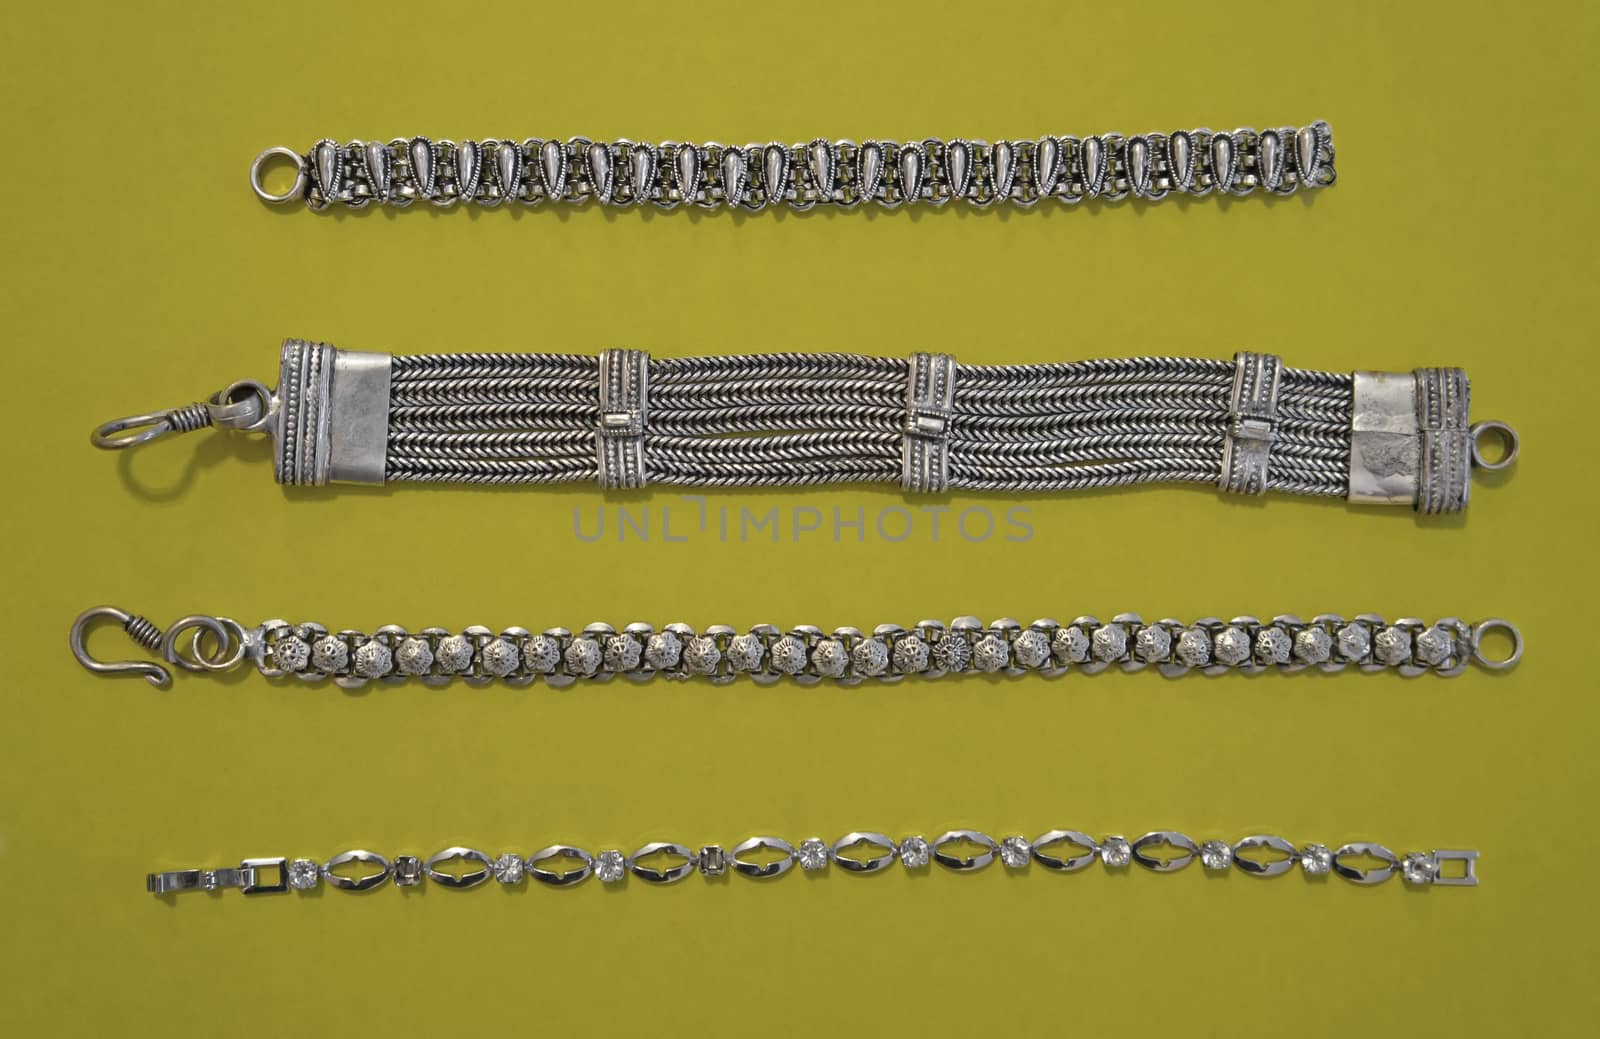 Asian old silver bracelets - National Kazakh culture